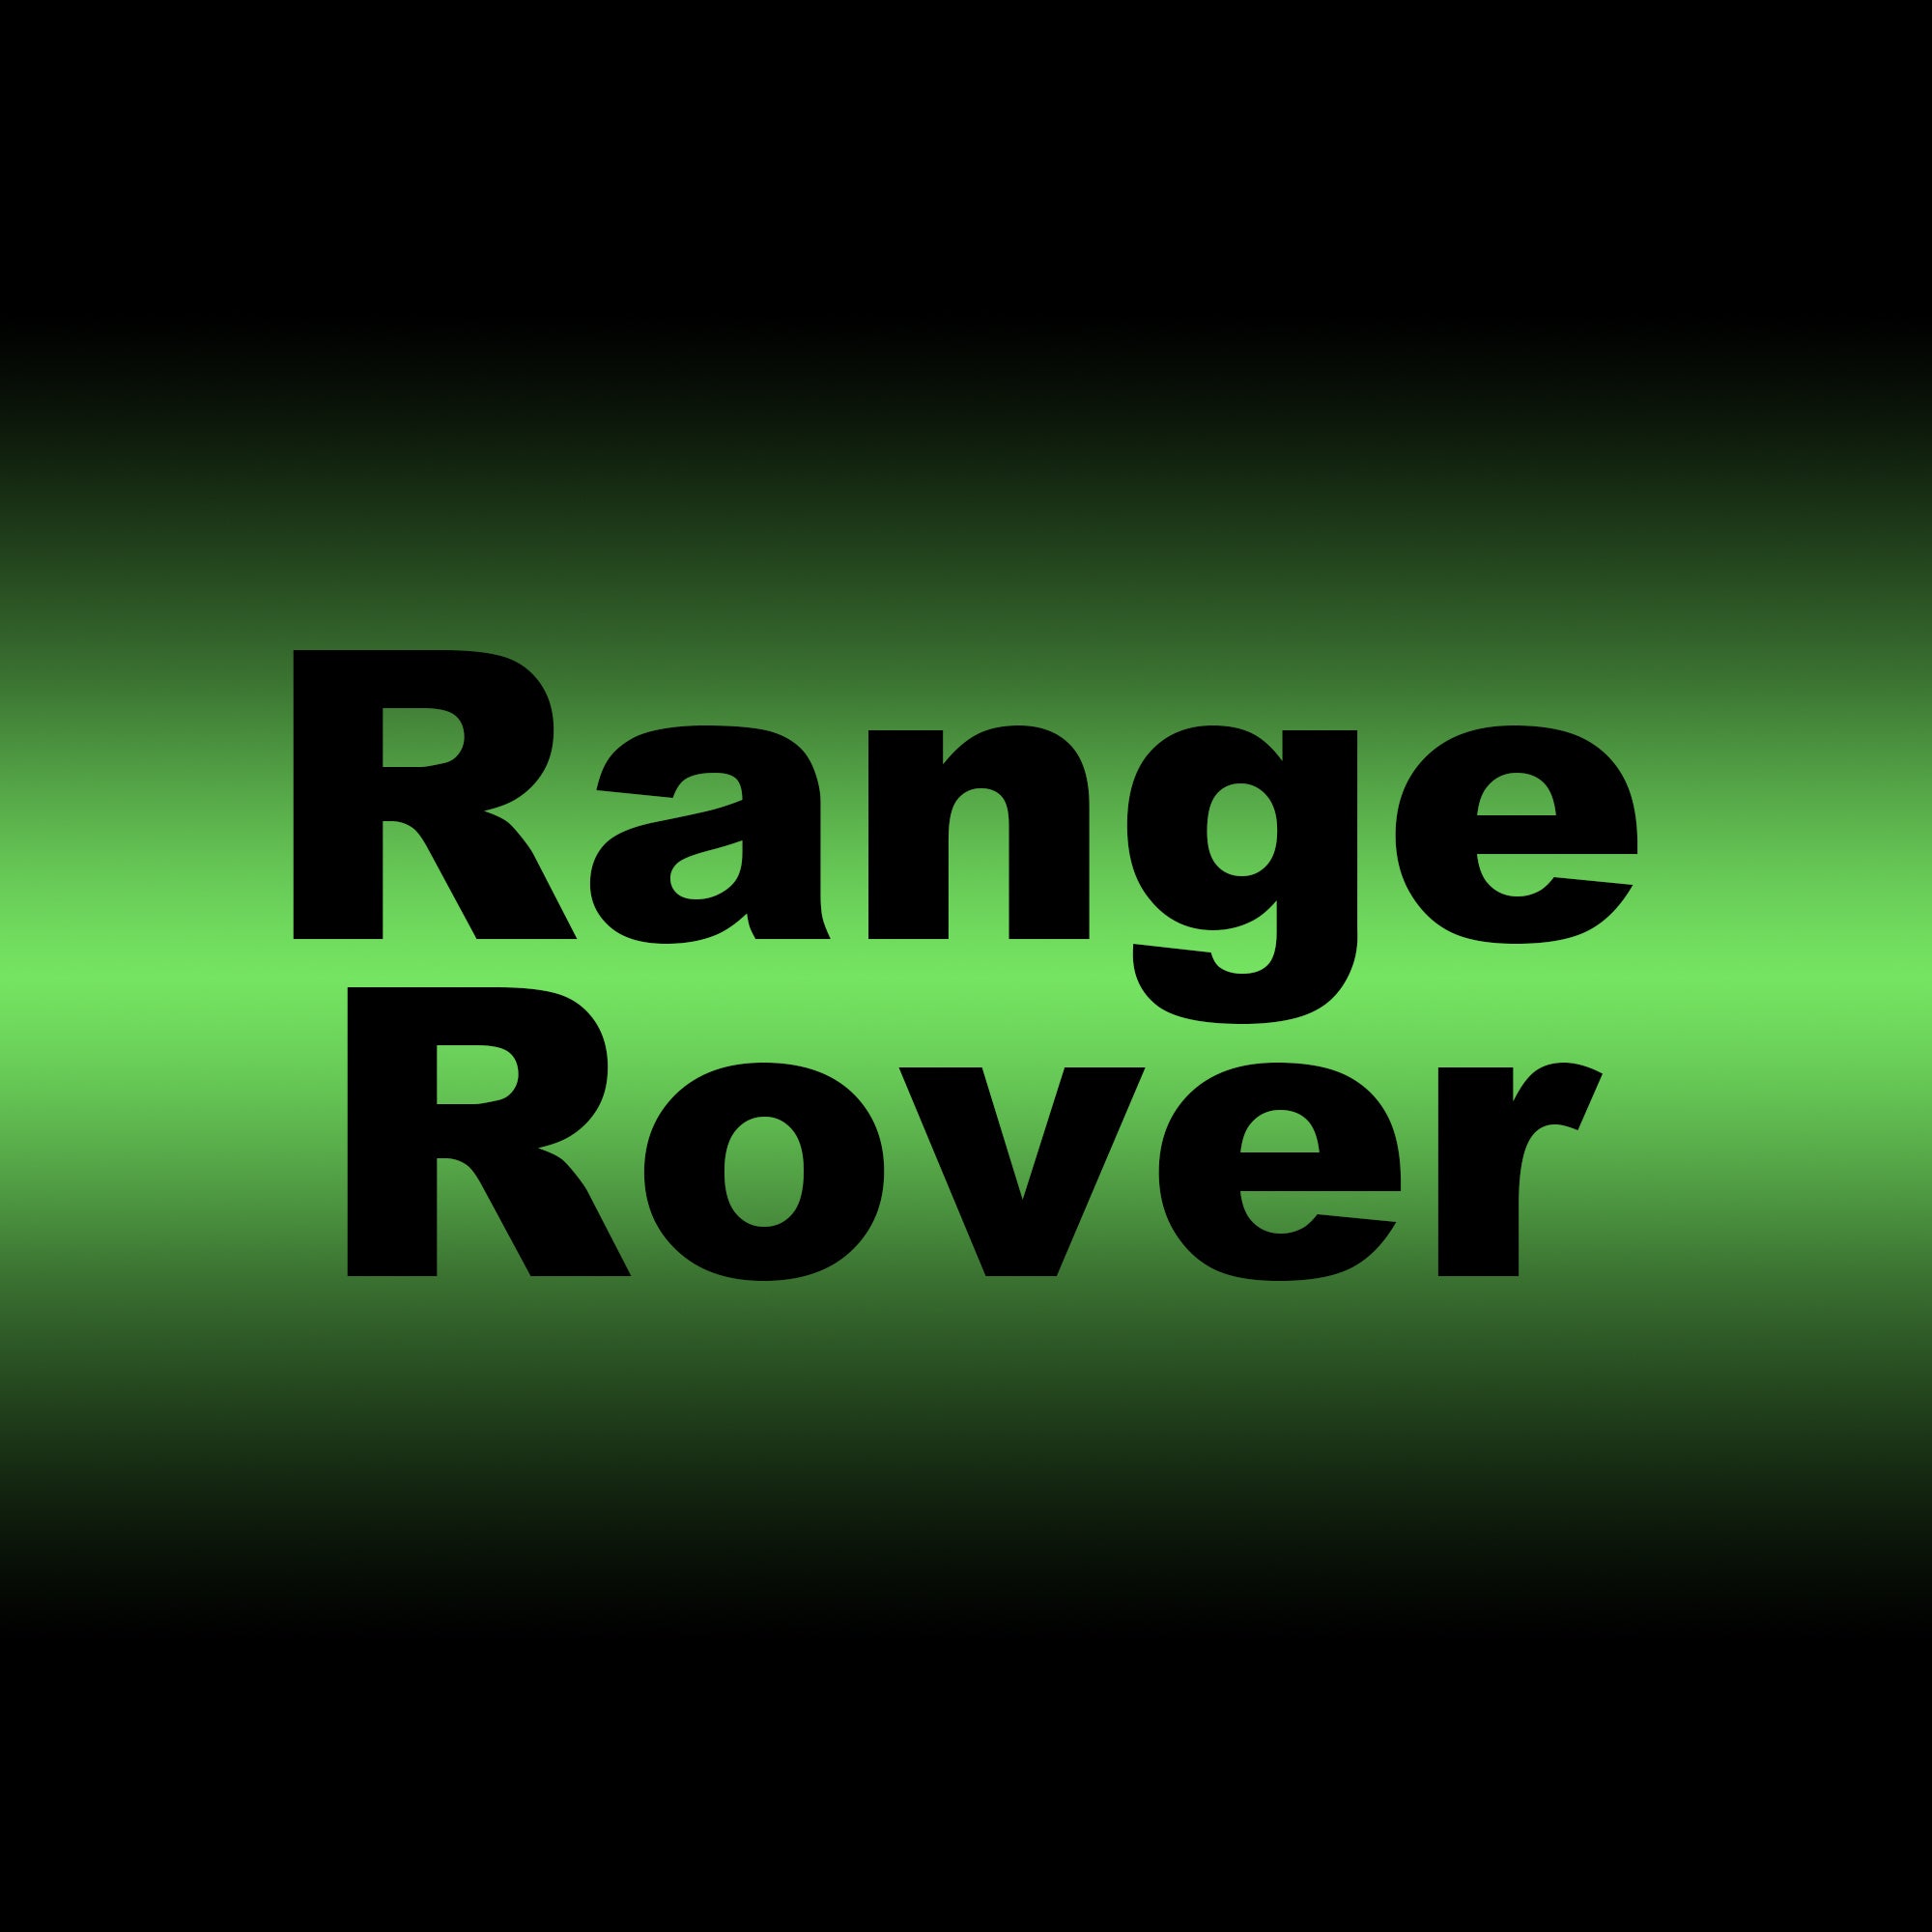 Rubber Tailored Car mats Range Rover - Green Flag vGroup